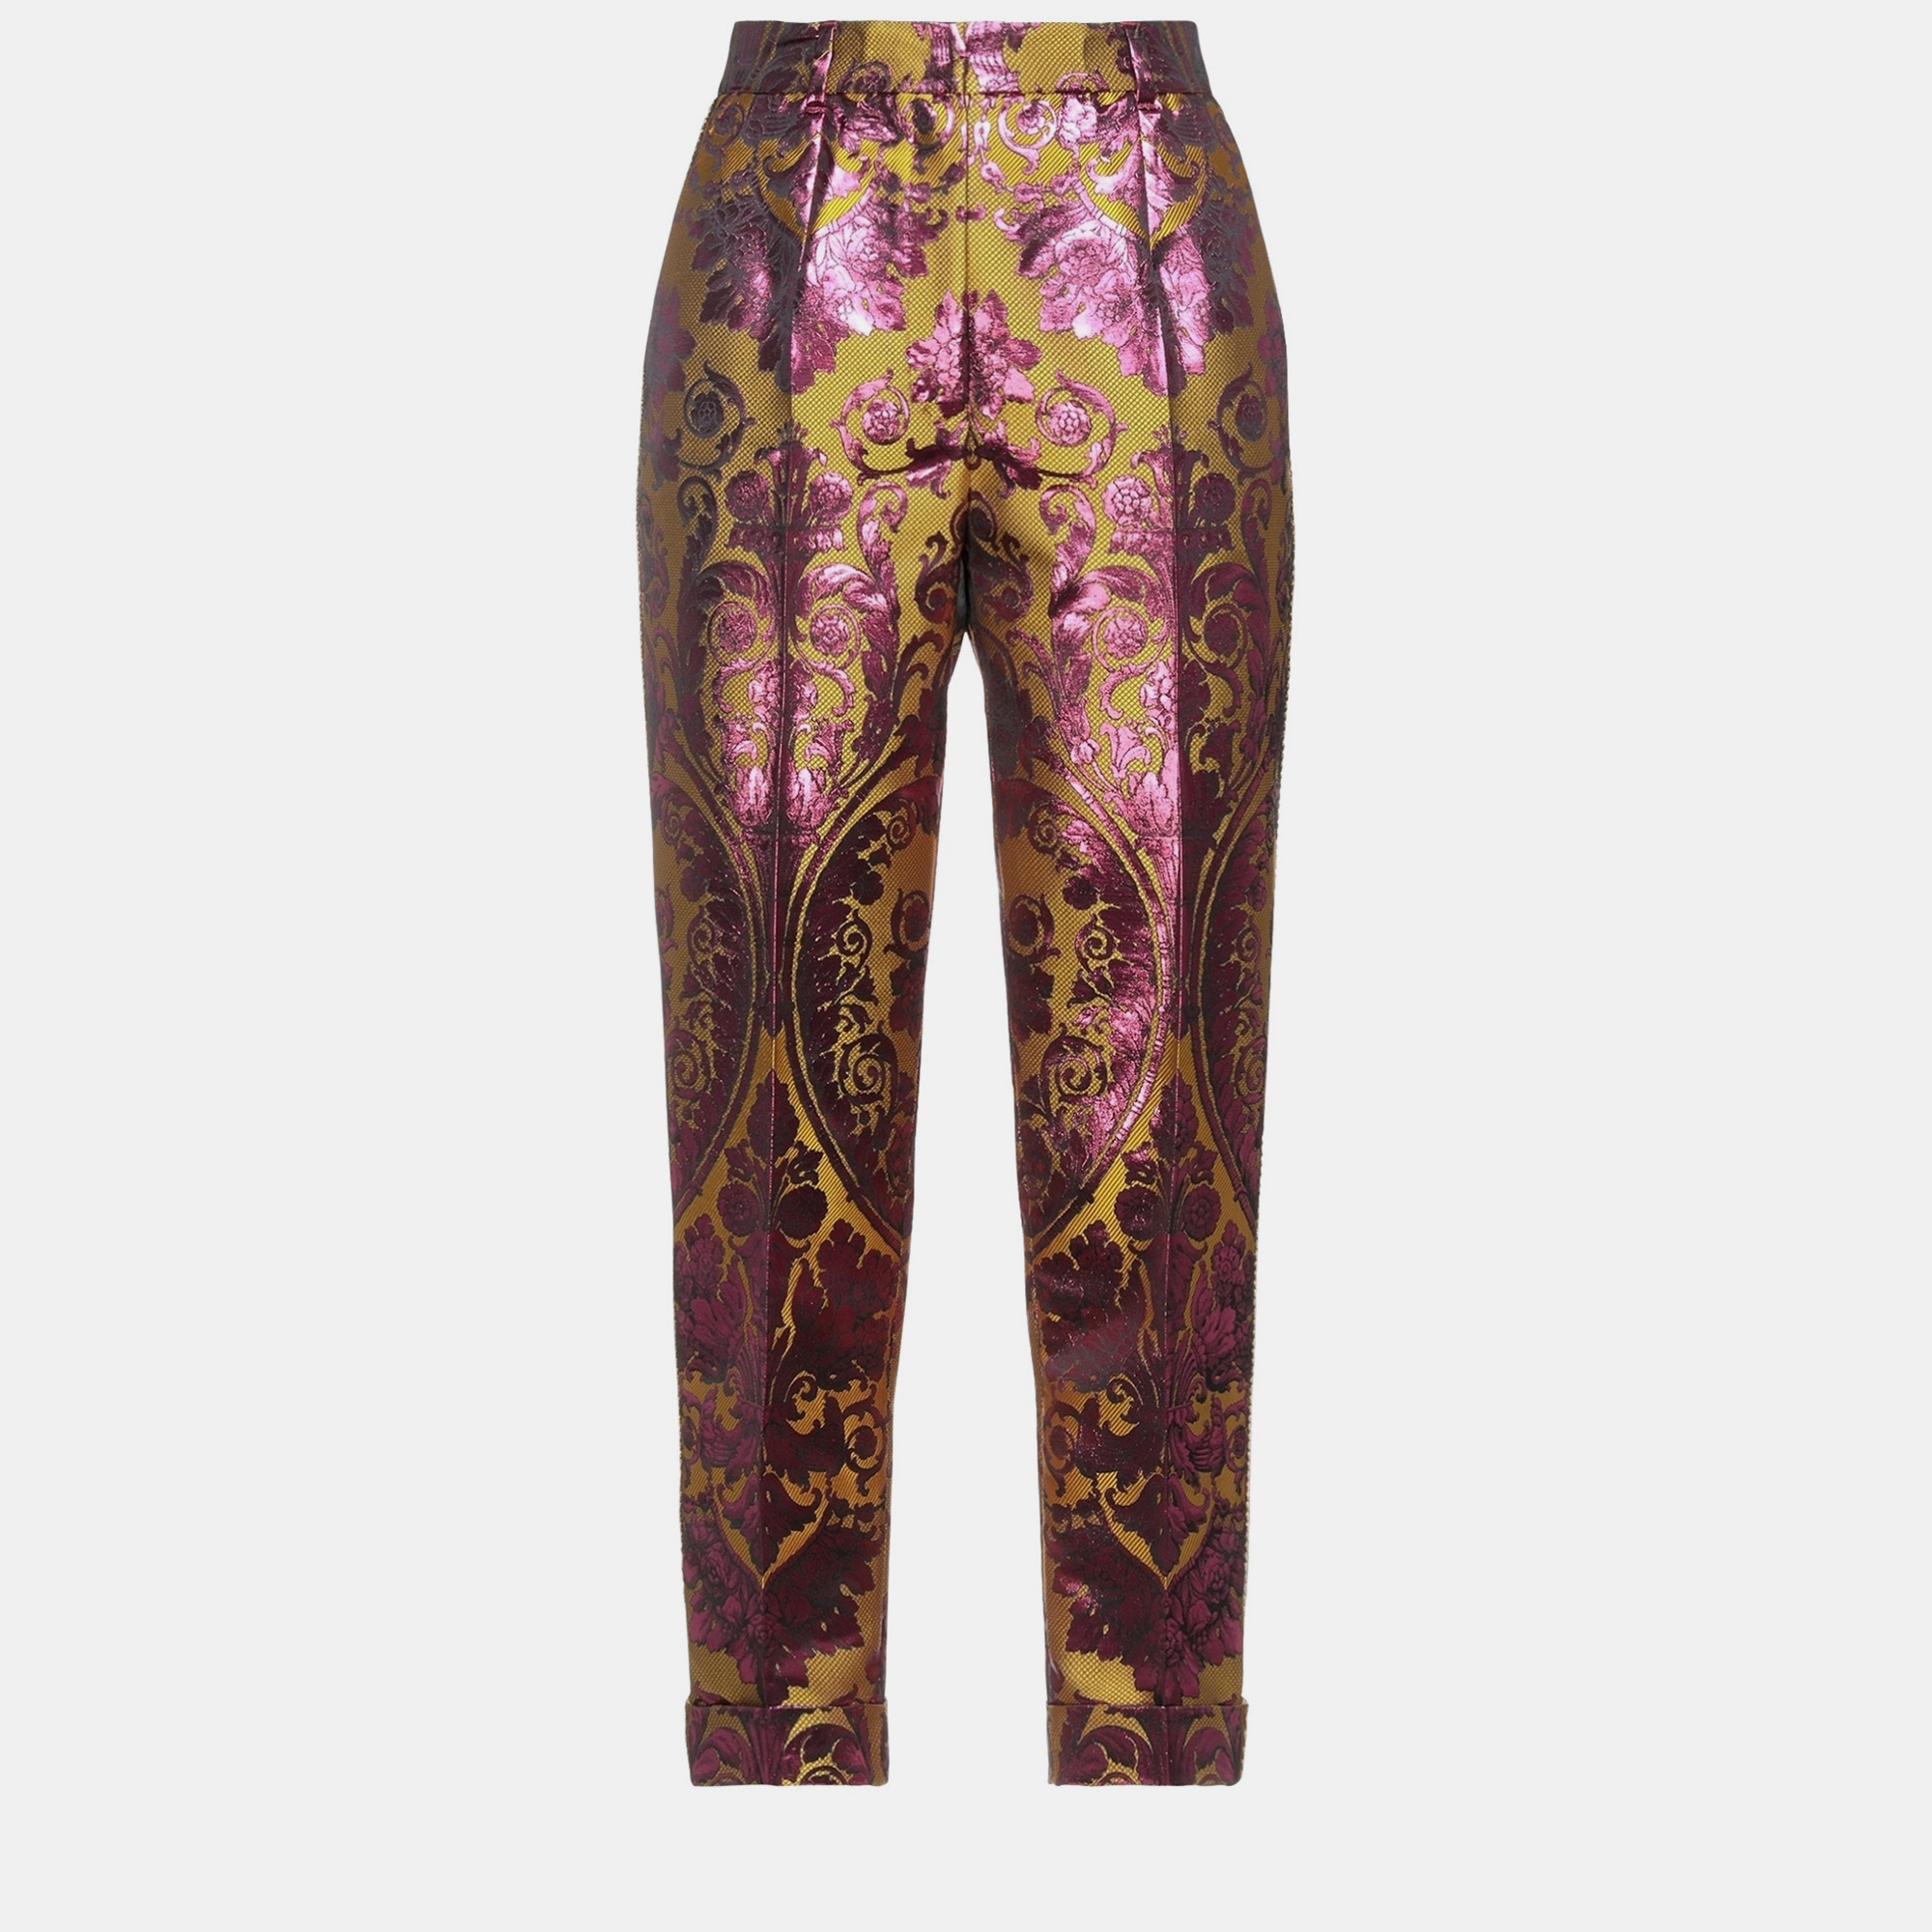 Dolce & gabbana yellow/pink baroque print polyester pants size 38